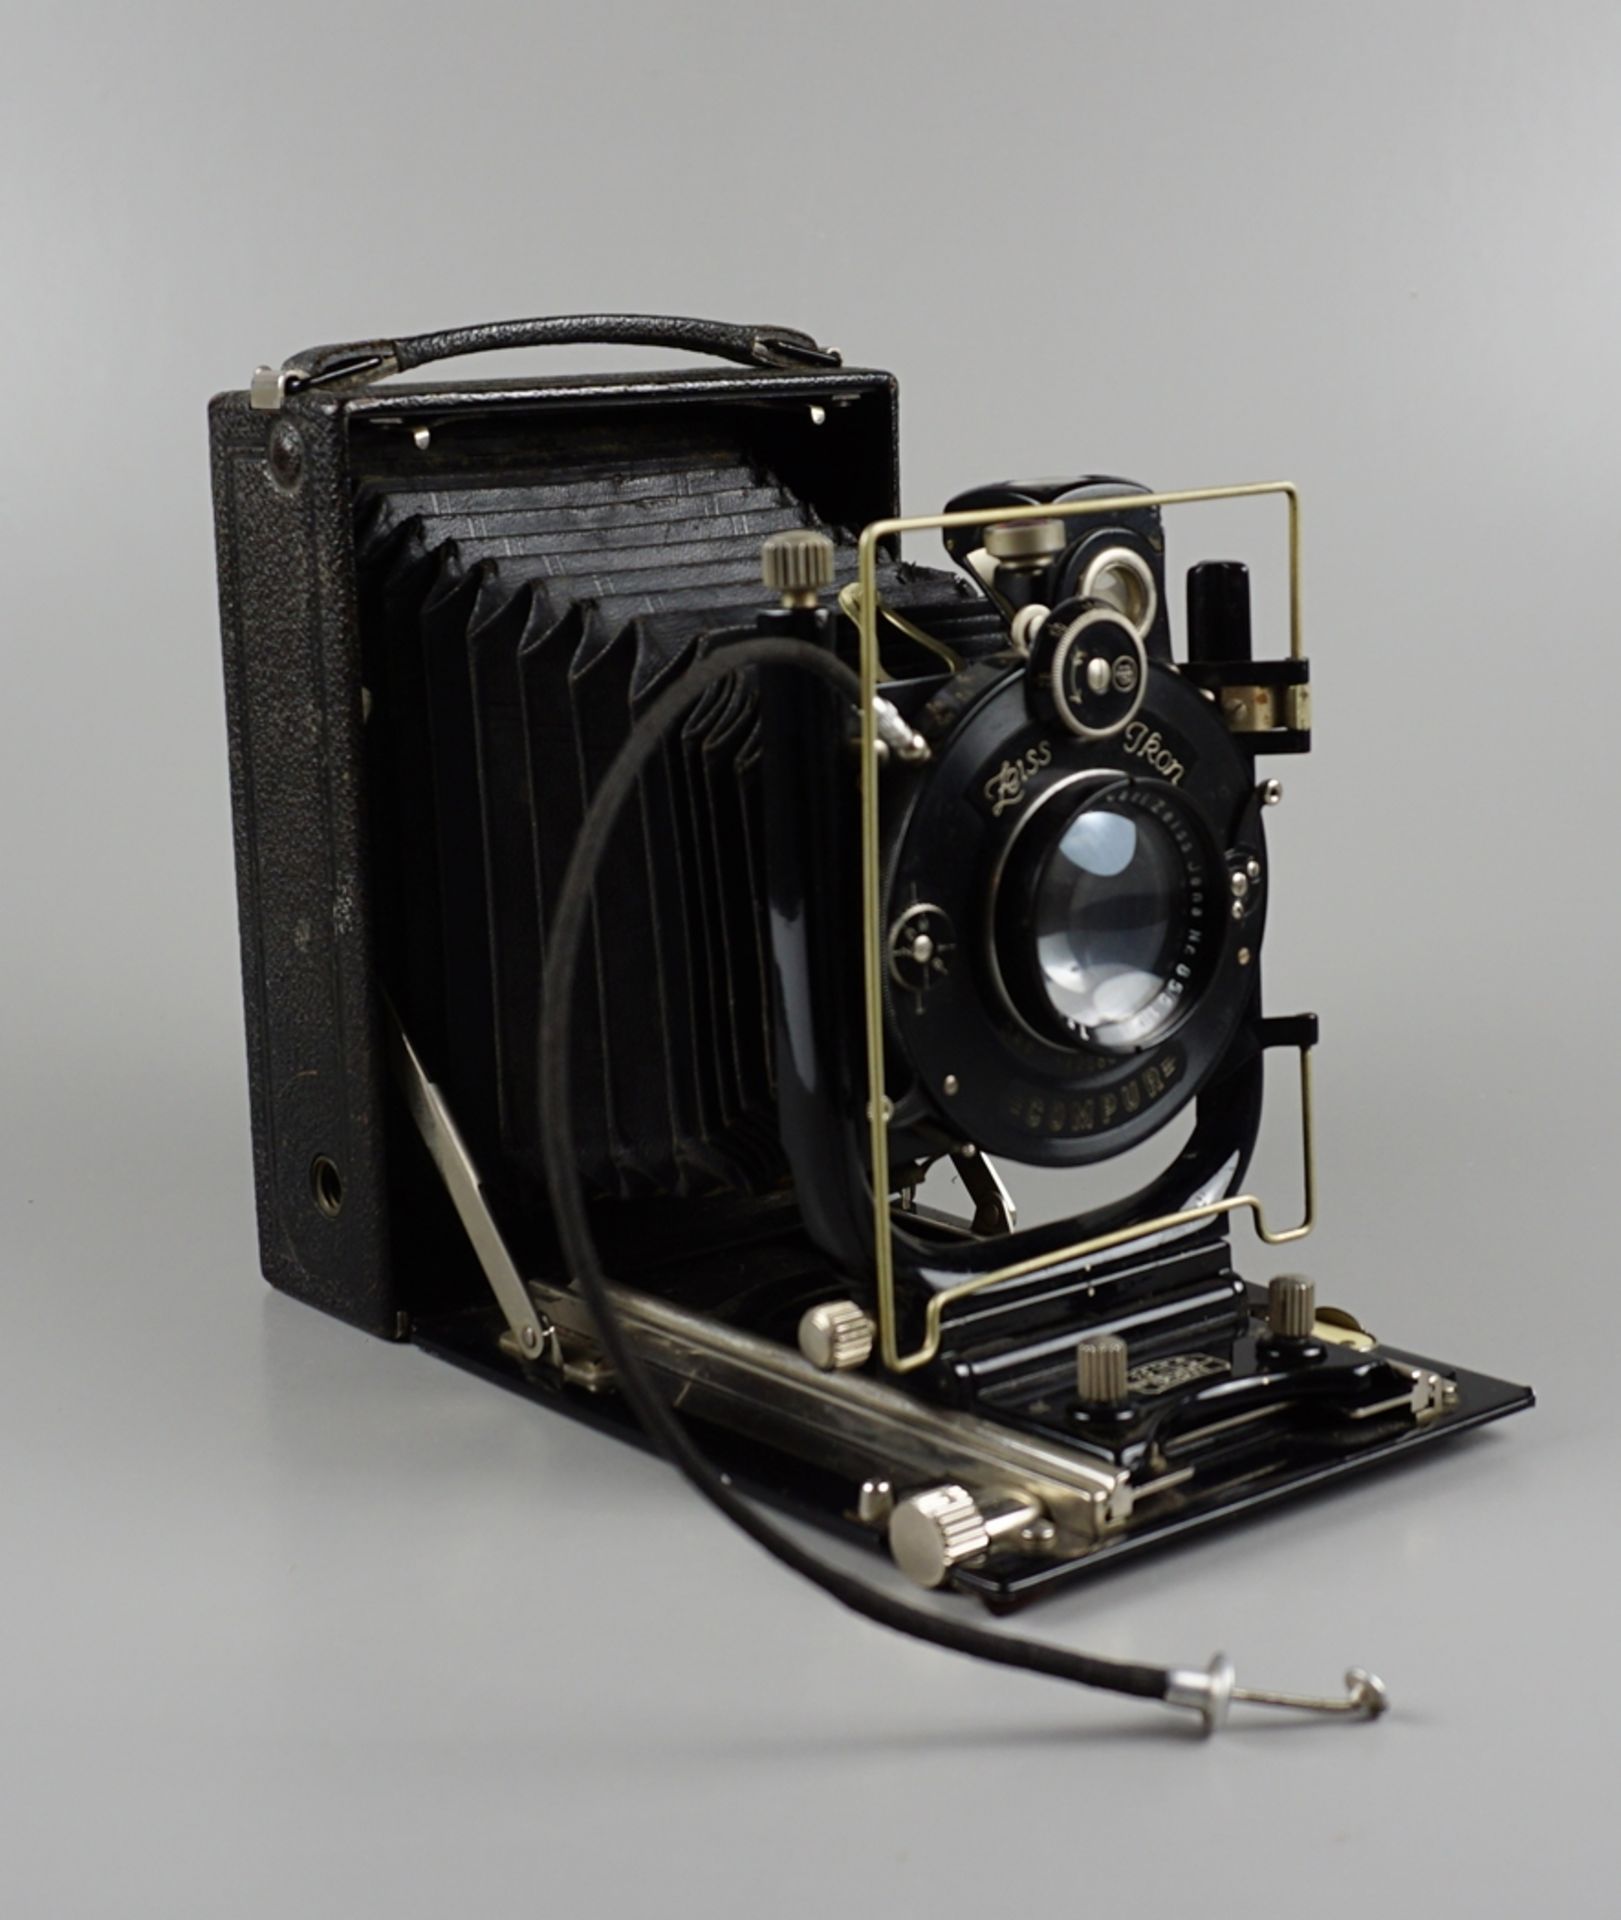 Plattenkamera/Laufbodenkamera, wohl "Ica Trona 210" , Zeiss Ikon, Dresden, 1920er Jahre